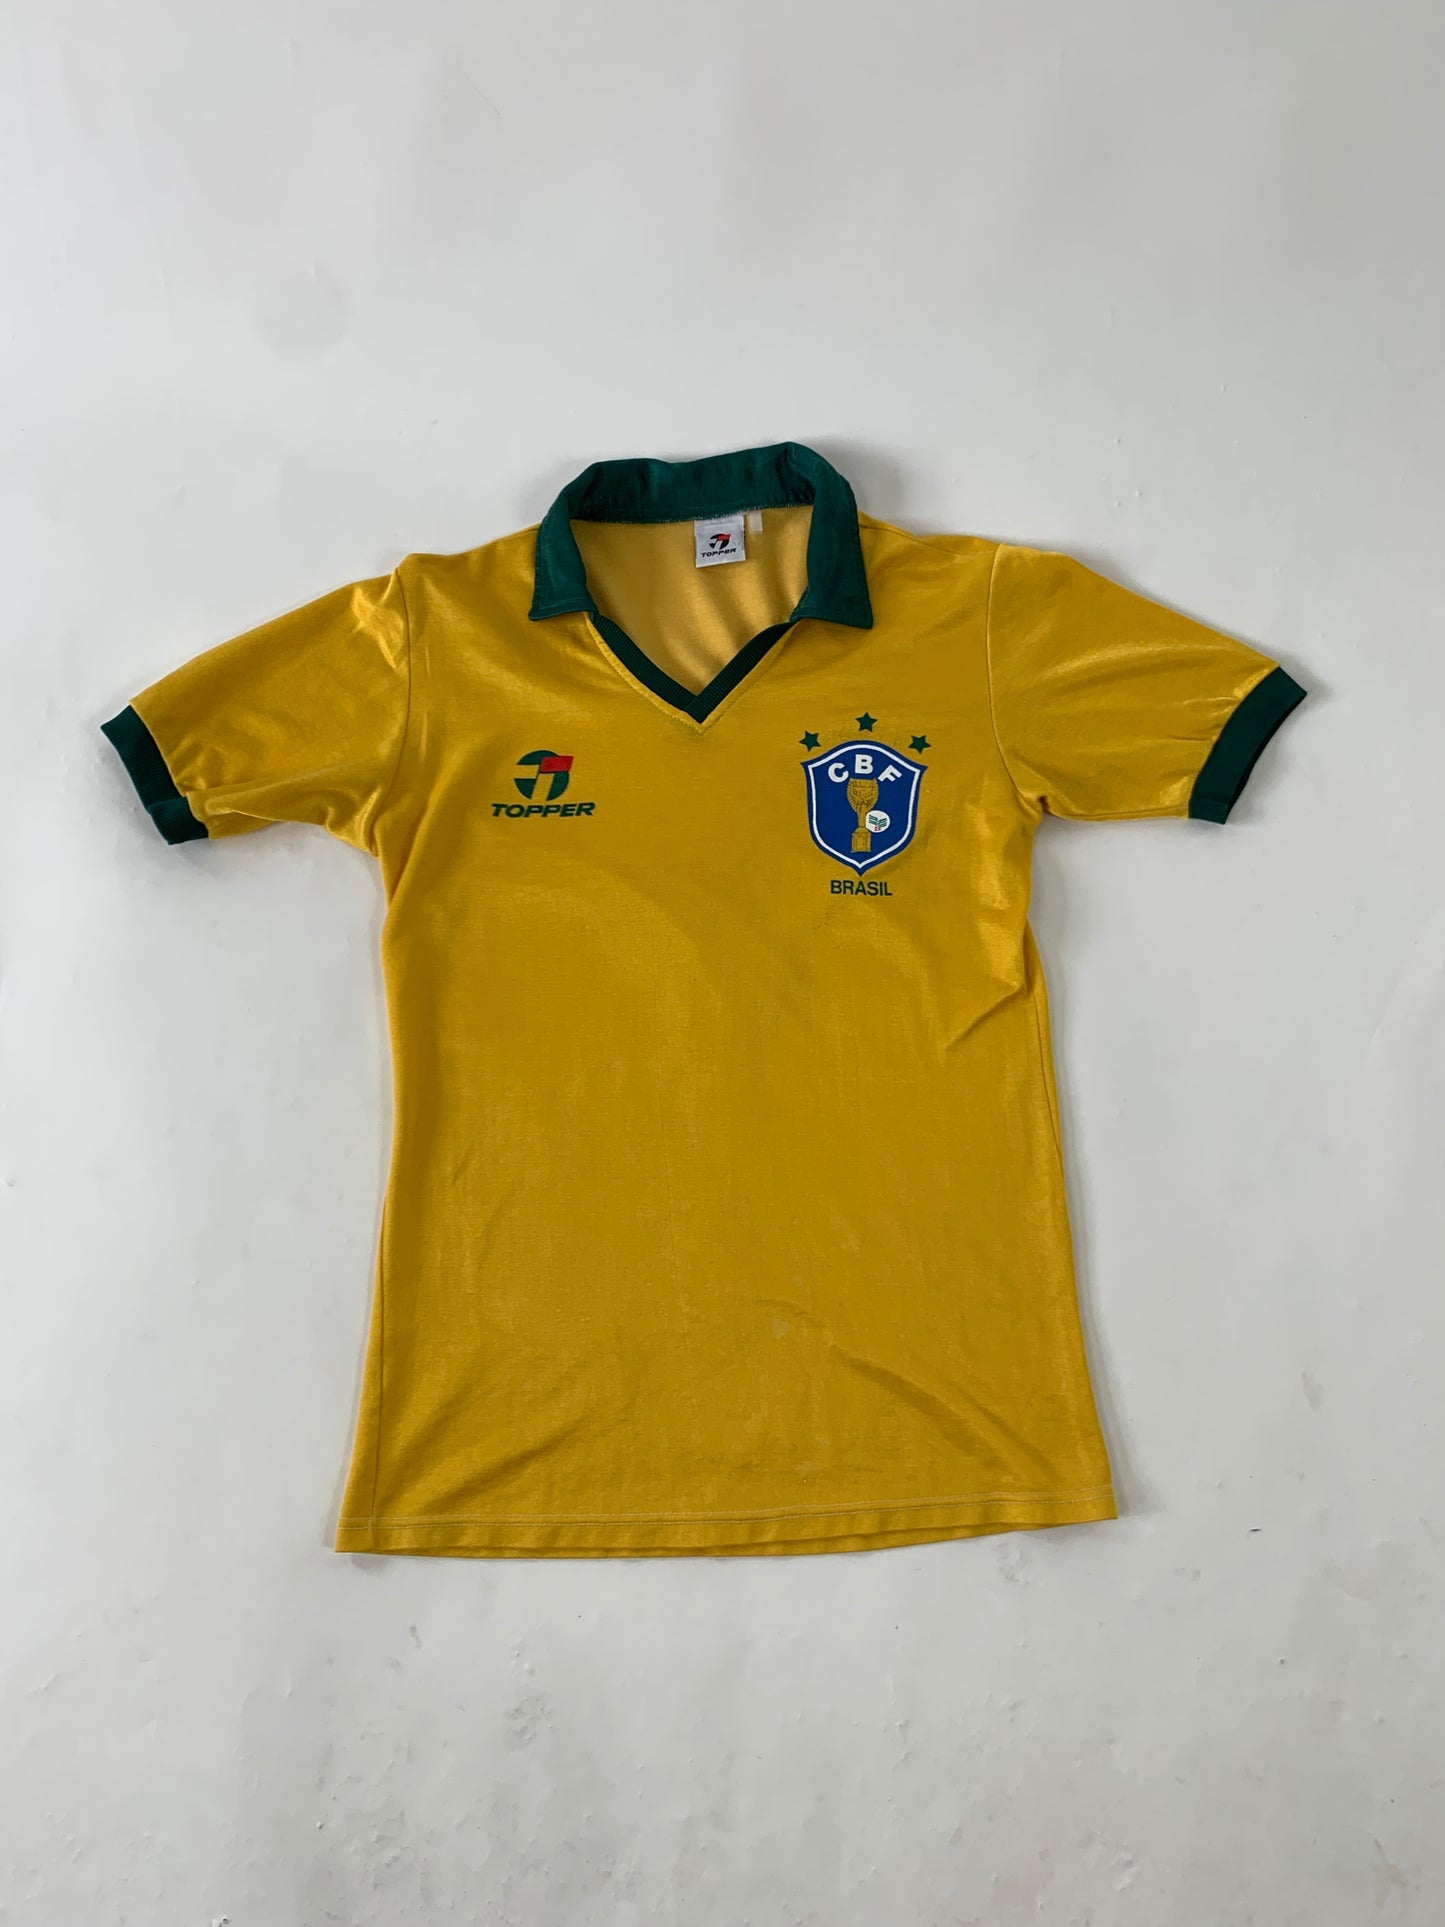 Jersey Topper 1985 Brasil Vintage - S